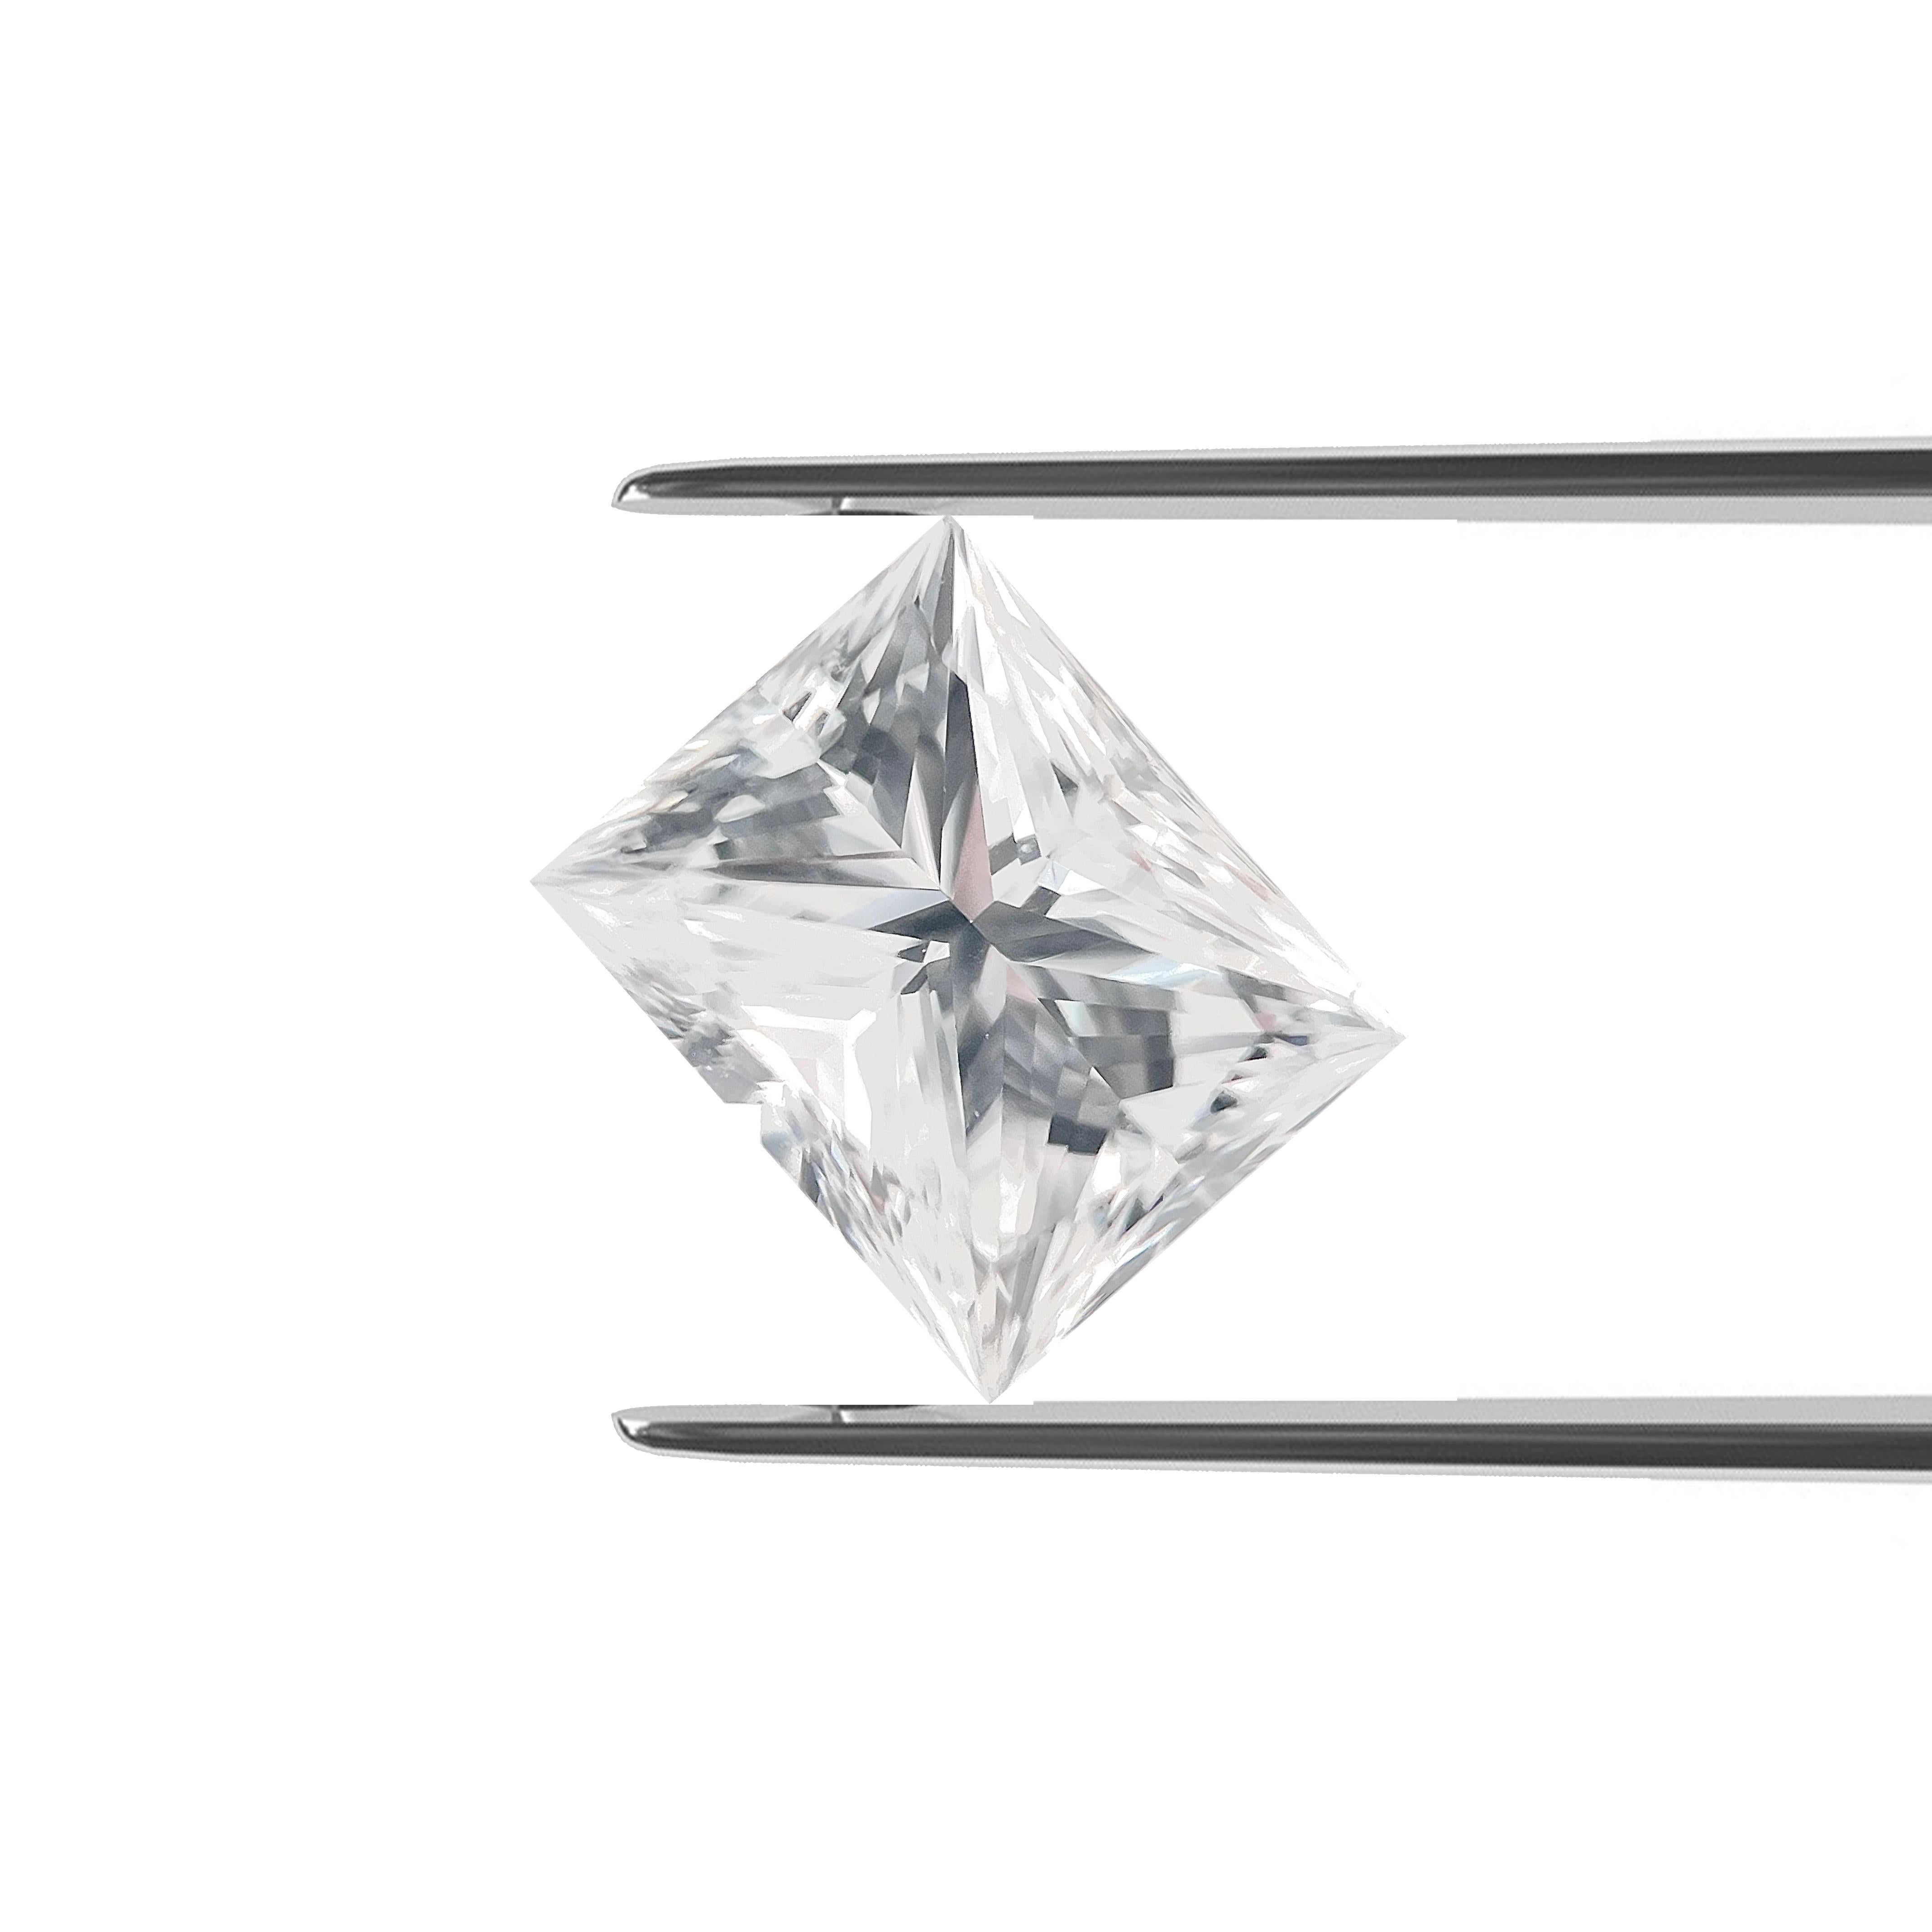  ITEM DESCRIPTION

ID #: NYC57056
Stone Shape: PRINCESS CUT DIAMOND
Diamond Weight: 1.02ct
Clarity: SI1
Color: E
Cut:	Excellent
Measurements: 6.22 x4.99x 4.10 mm
Depth %:	82.10%
Table %:	73.00%
Symmetry: Good
Polish: Very Good
Fluorescence: